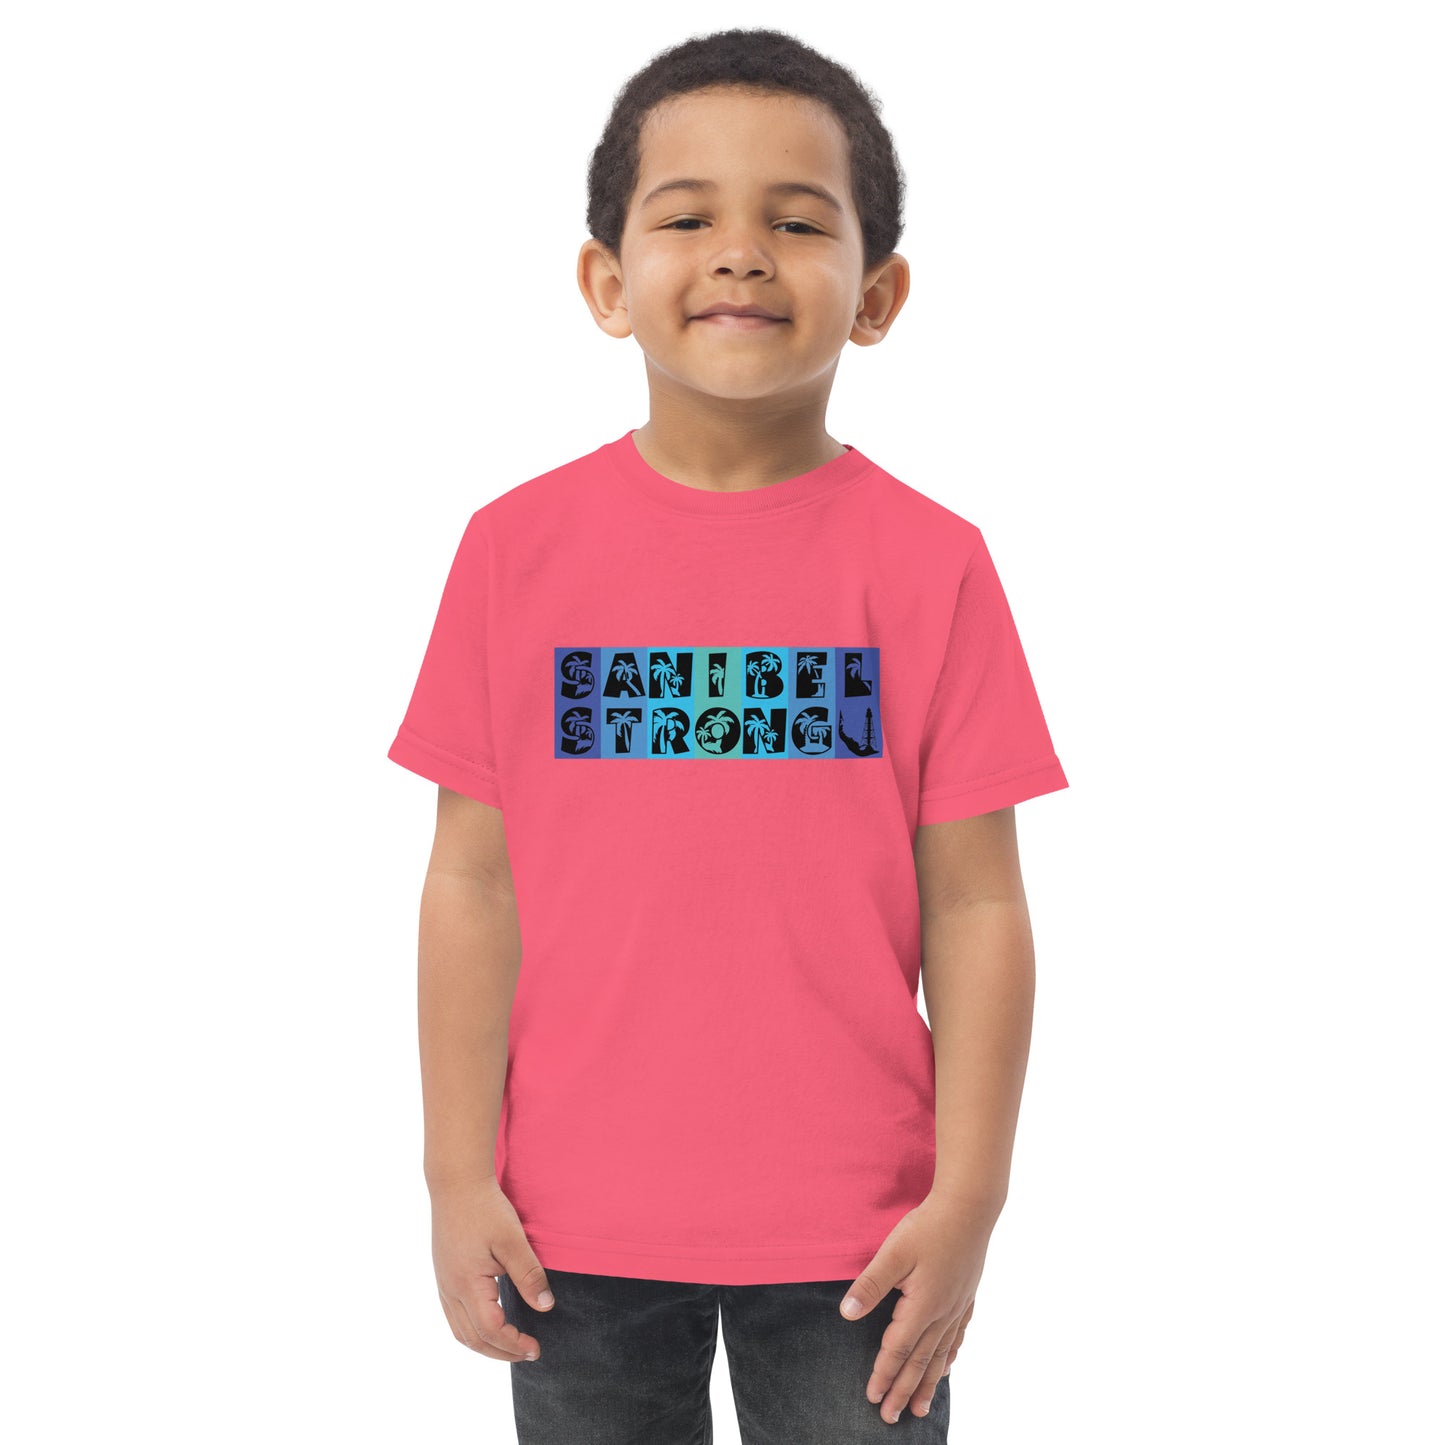 Sanibel Strong Toddler Shirt - Blue Design